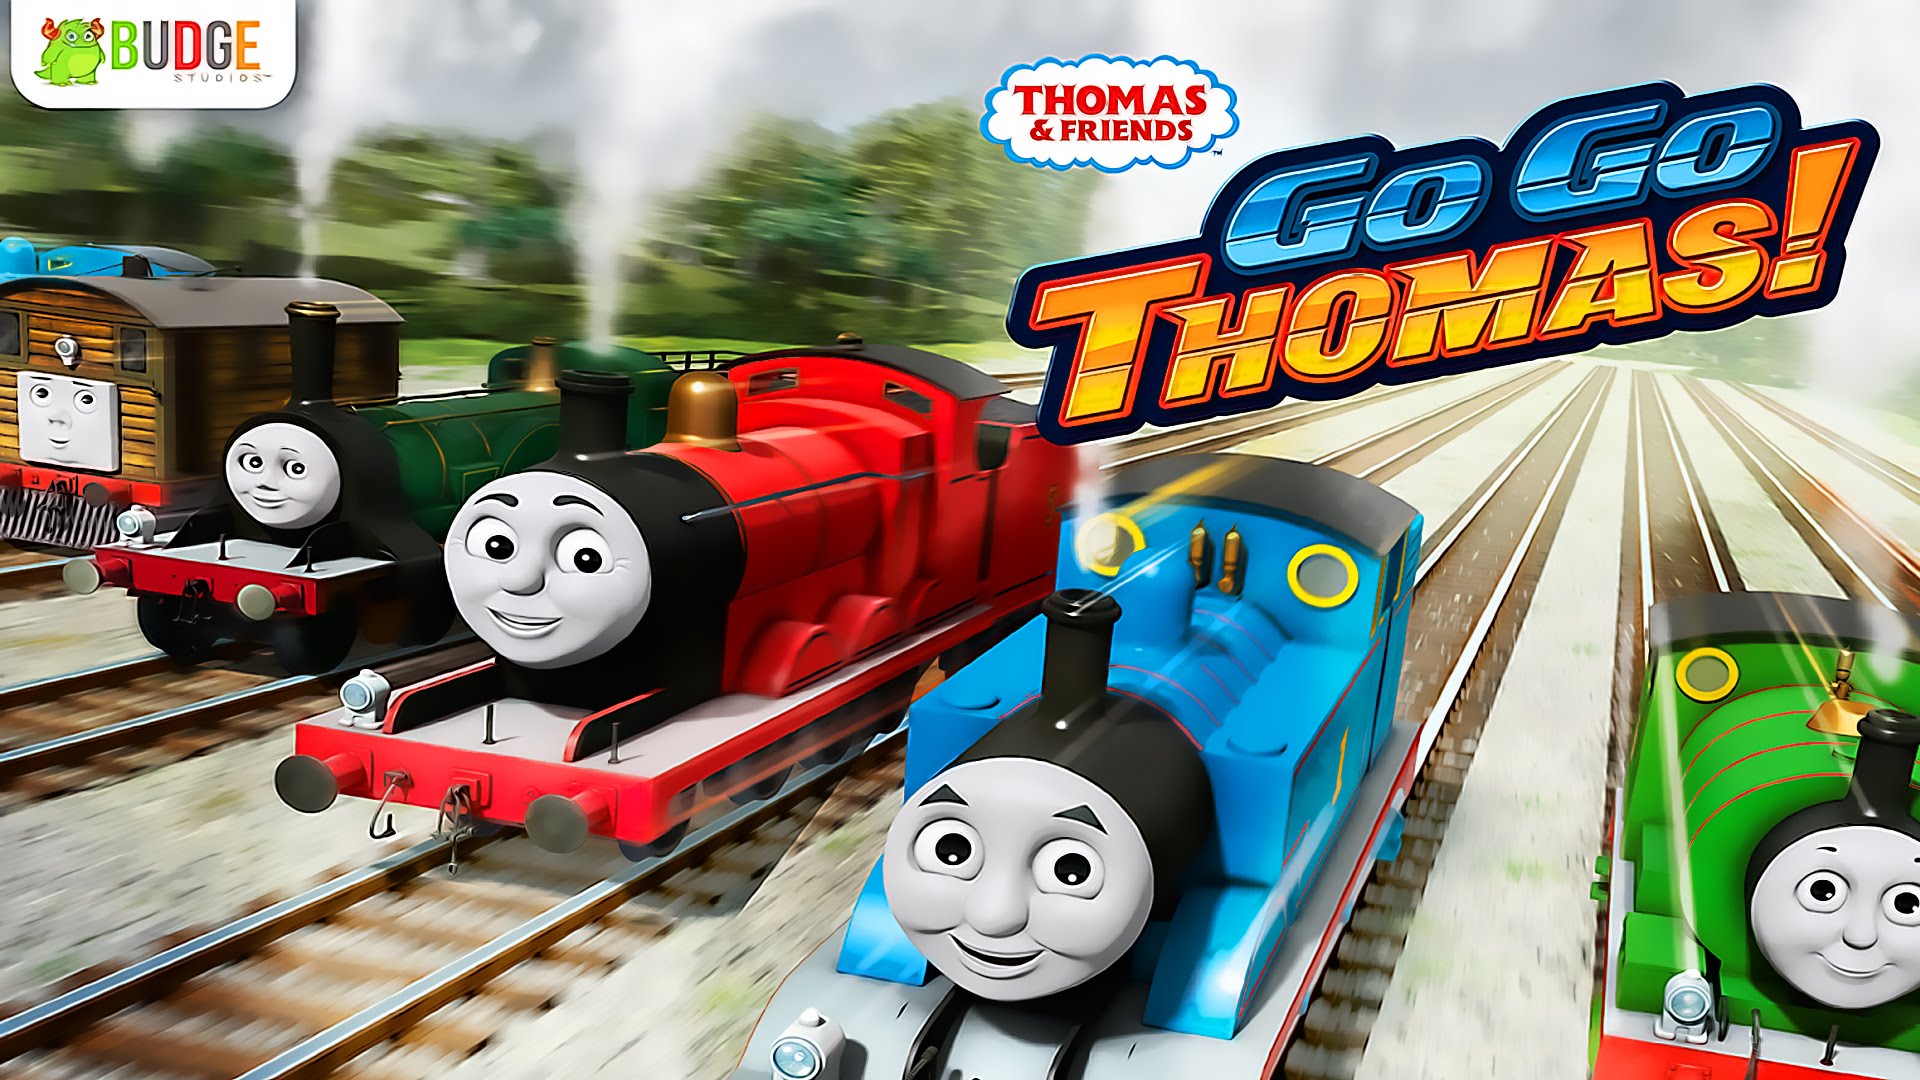 Thomas & Friends Go Go Thomas - Cartoon & Game for Children - HD